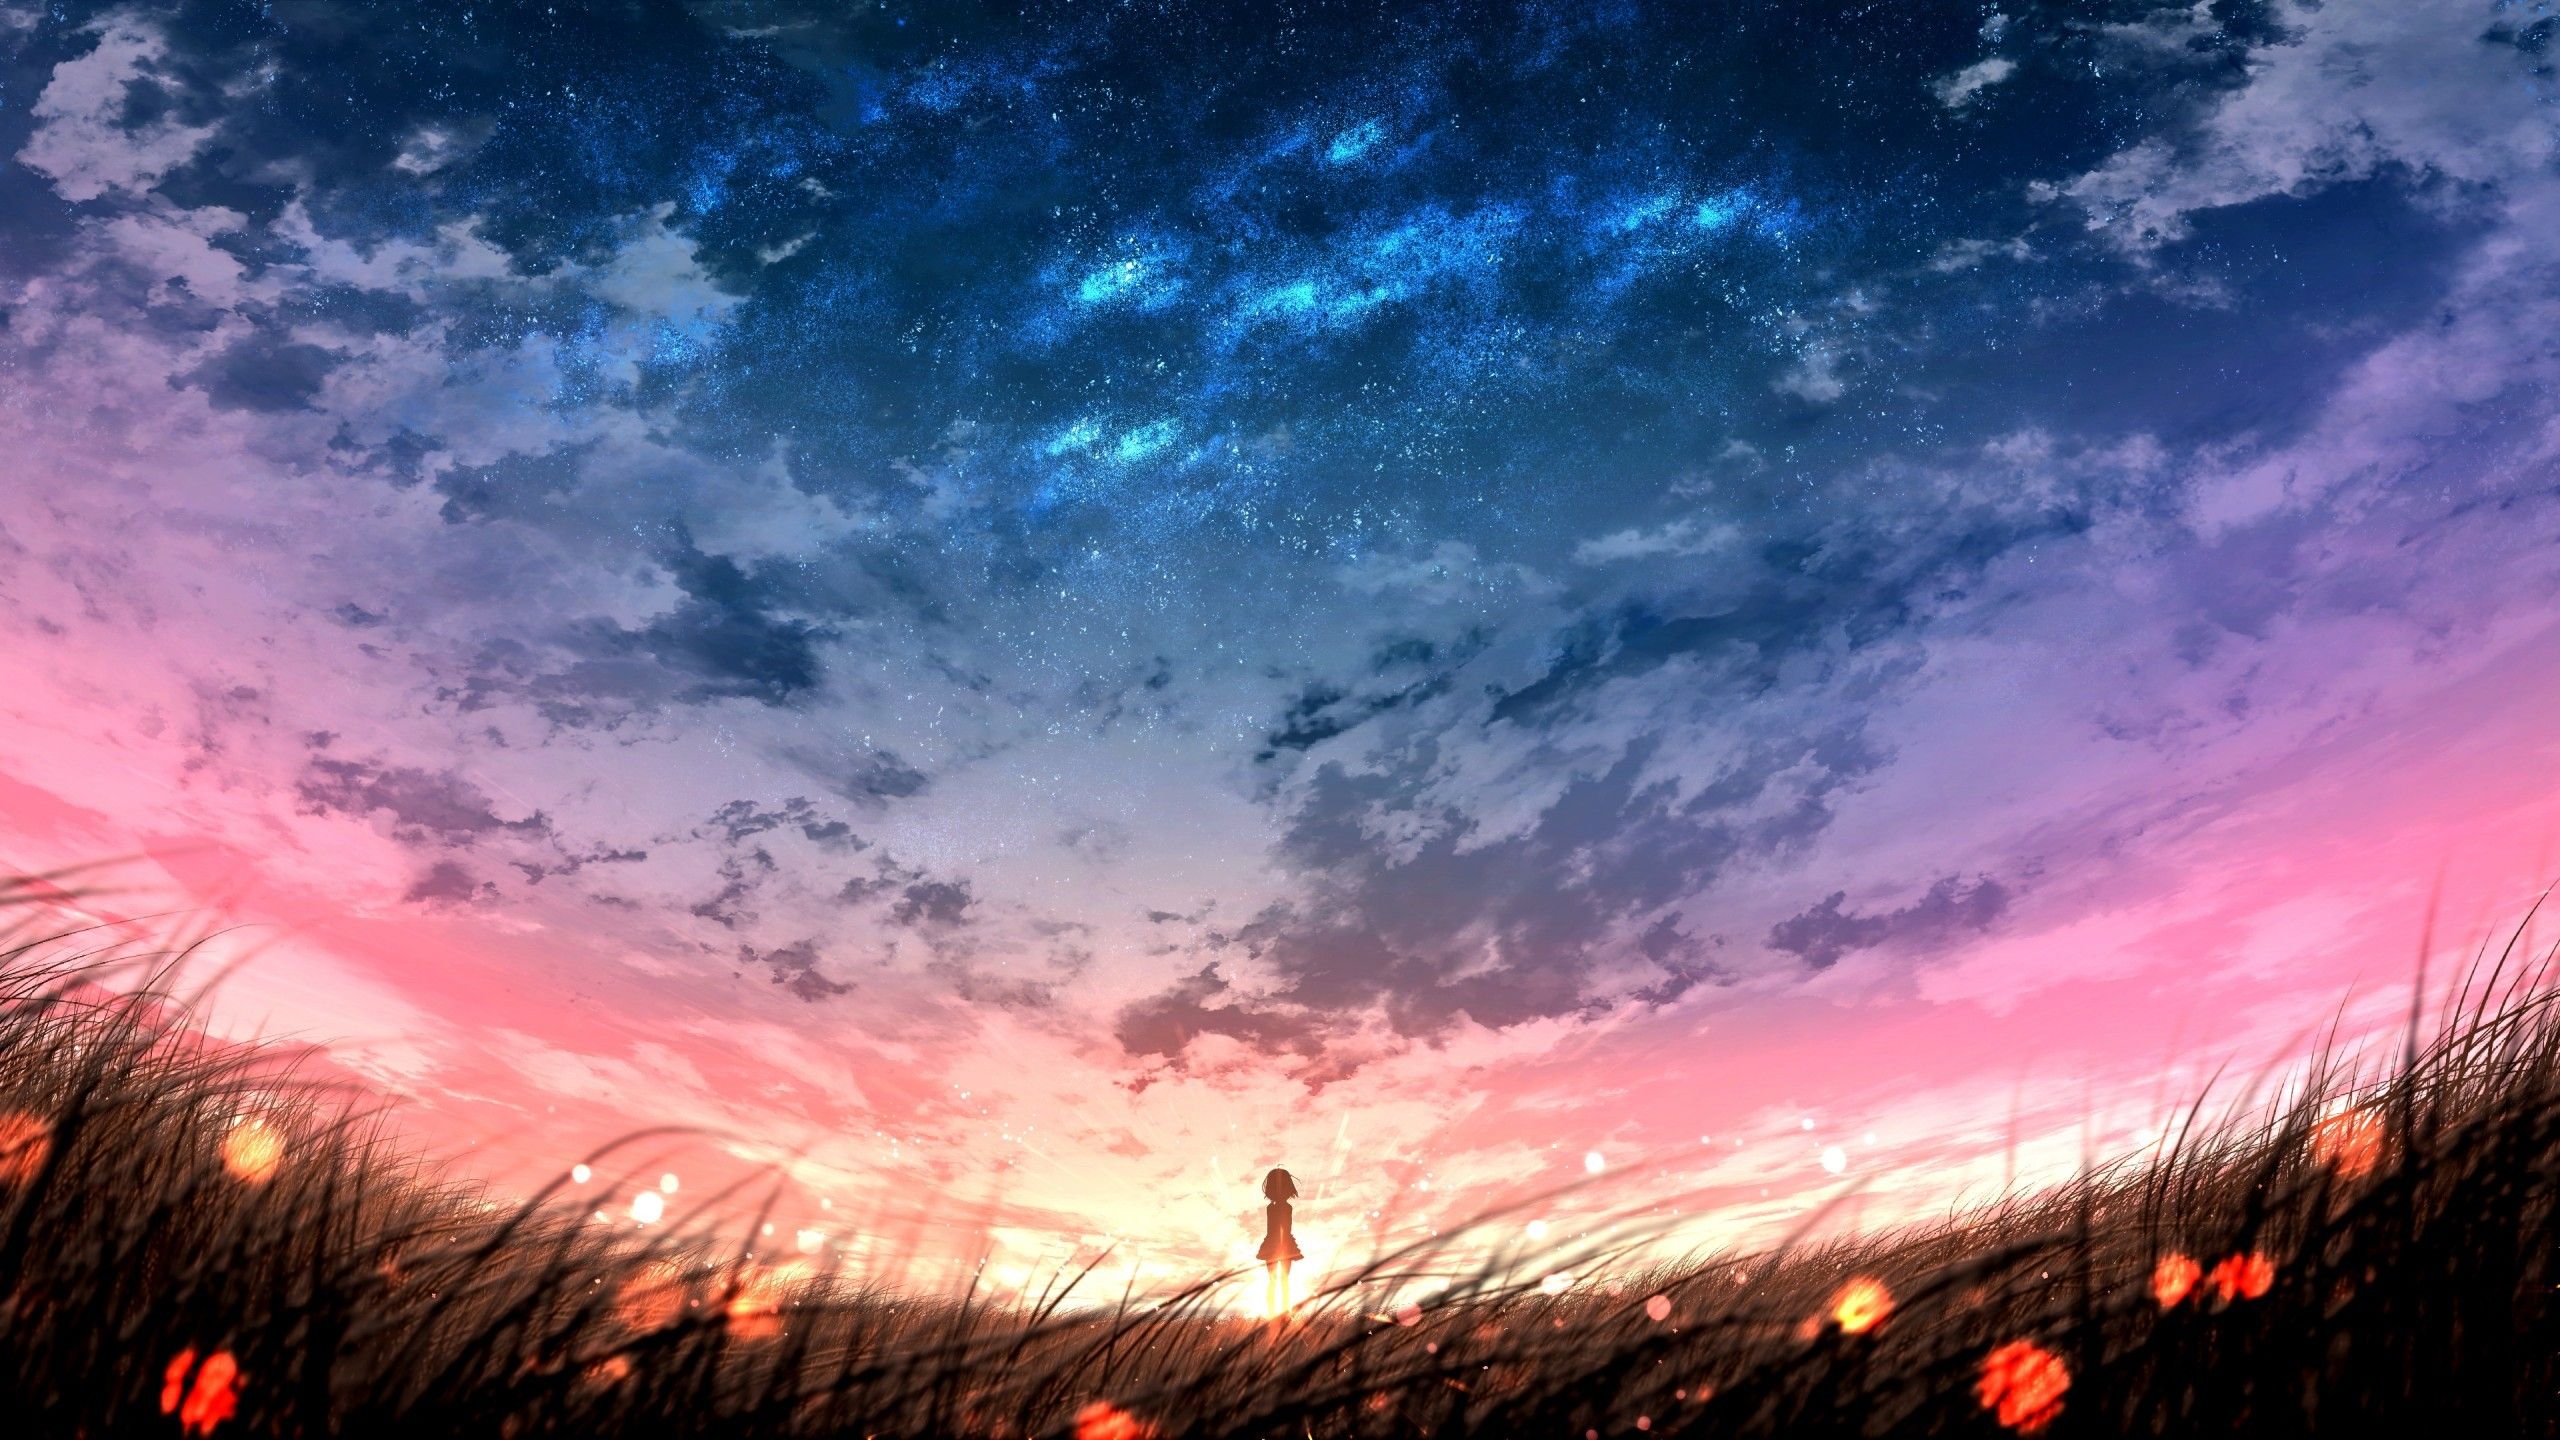 Download 2560x1440 Anime Landscape .wallpapermaiden.com